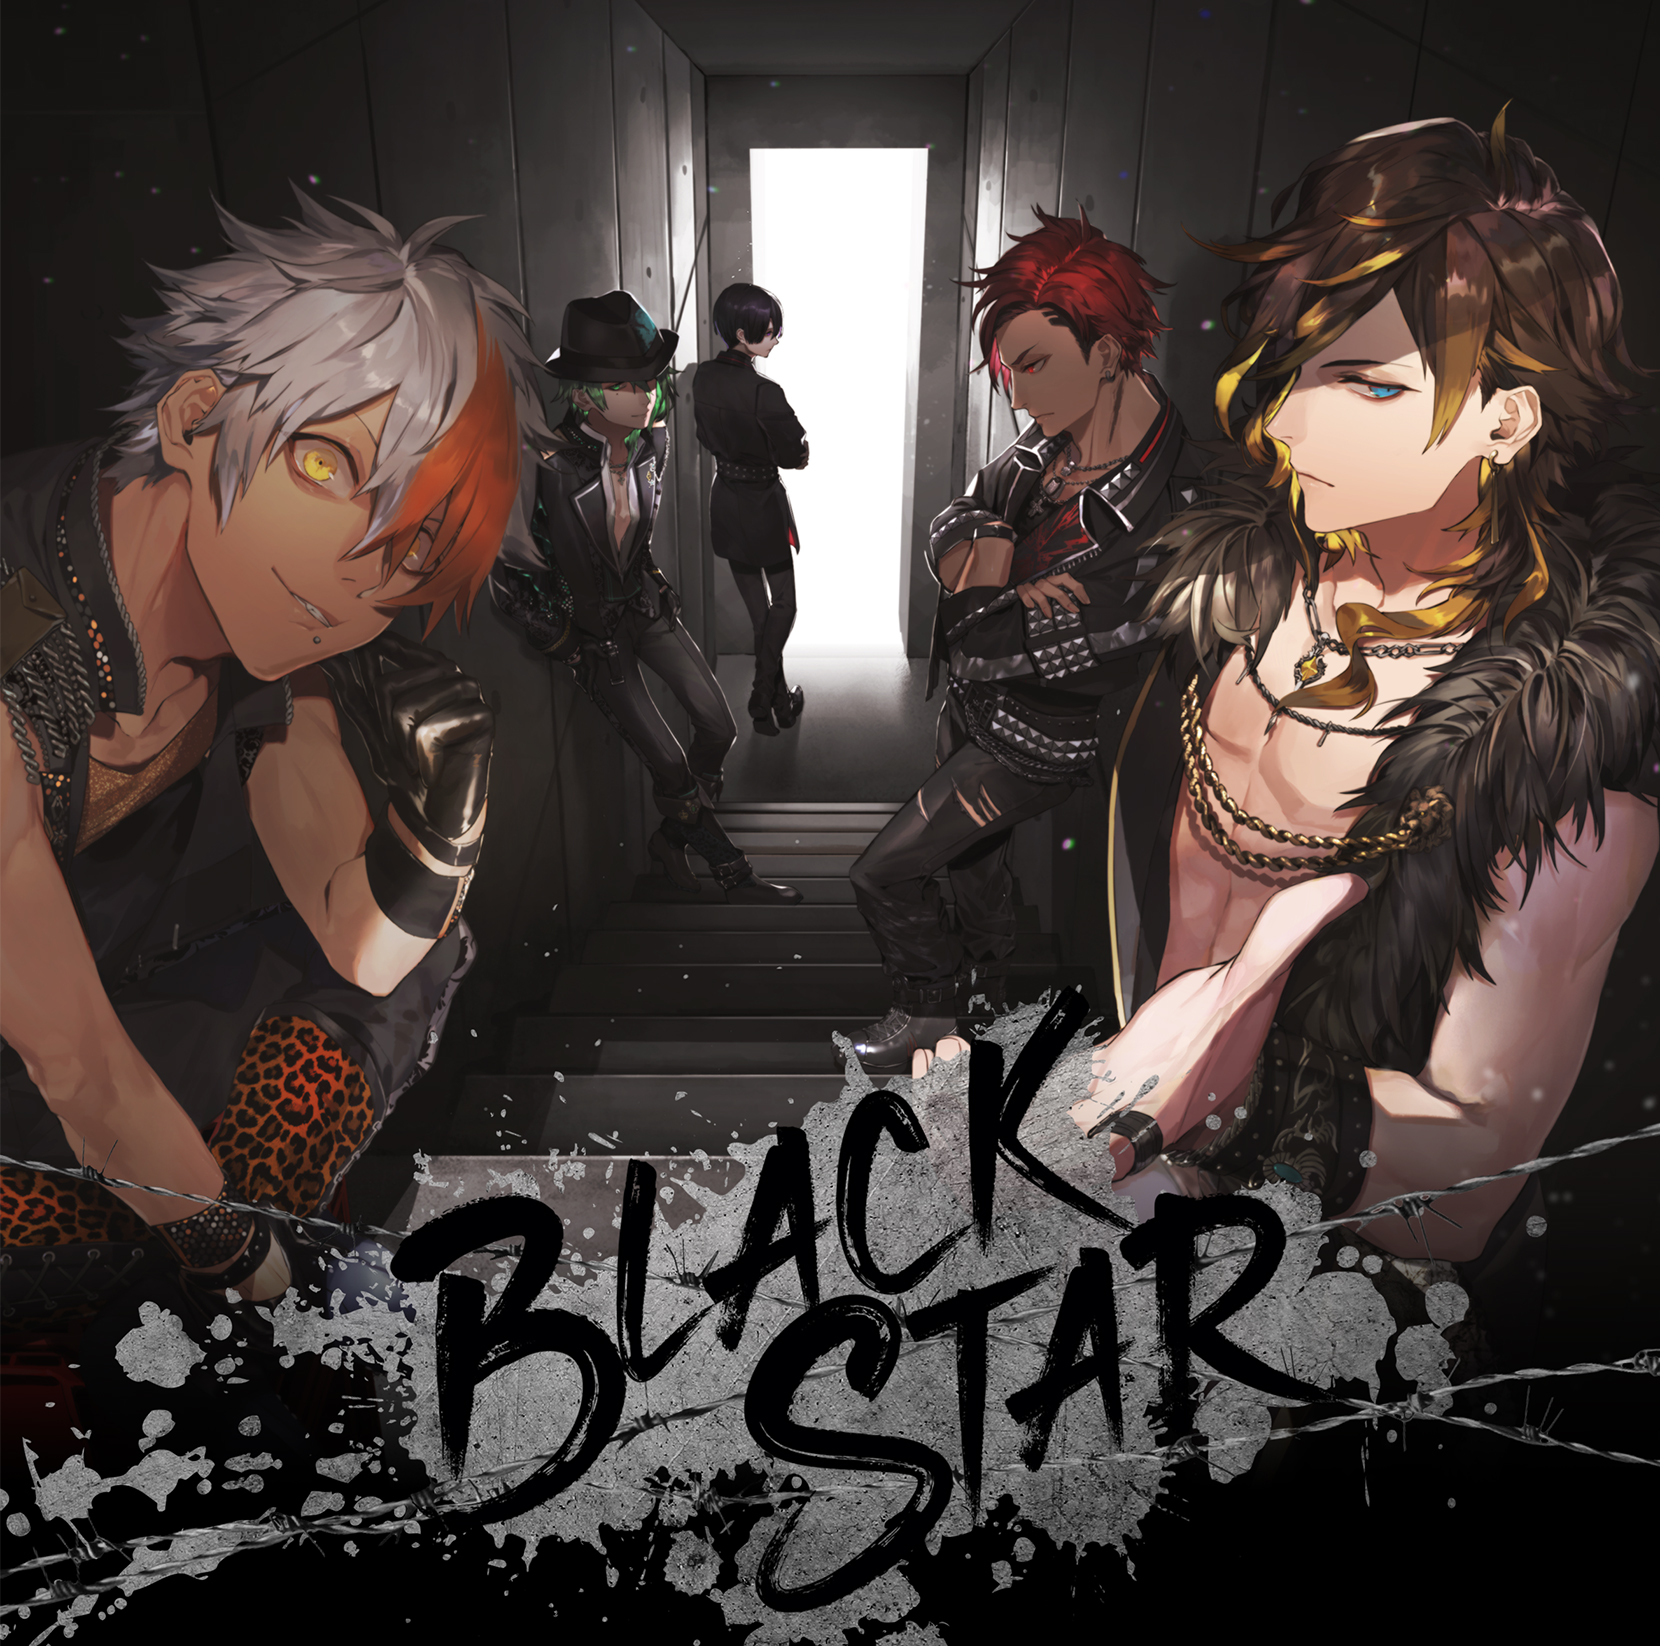 BLACK STAR 1stアルバム 限定盤 全チームセット - CD